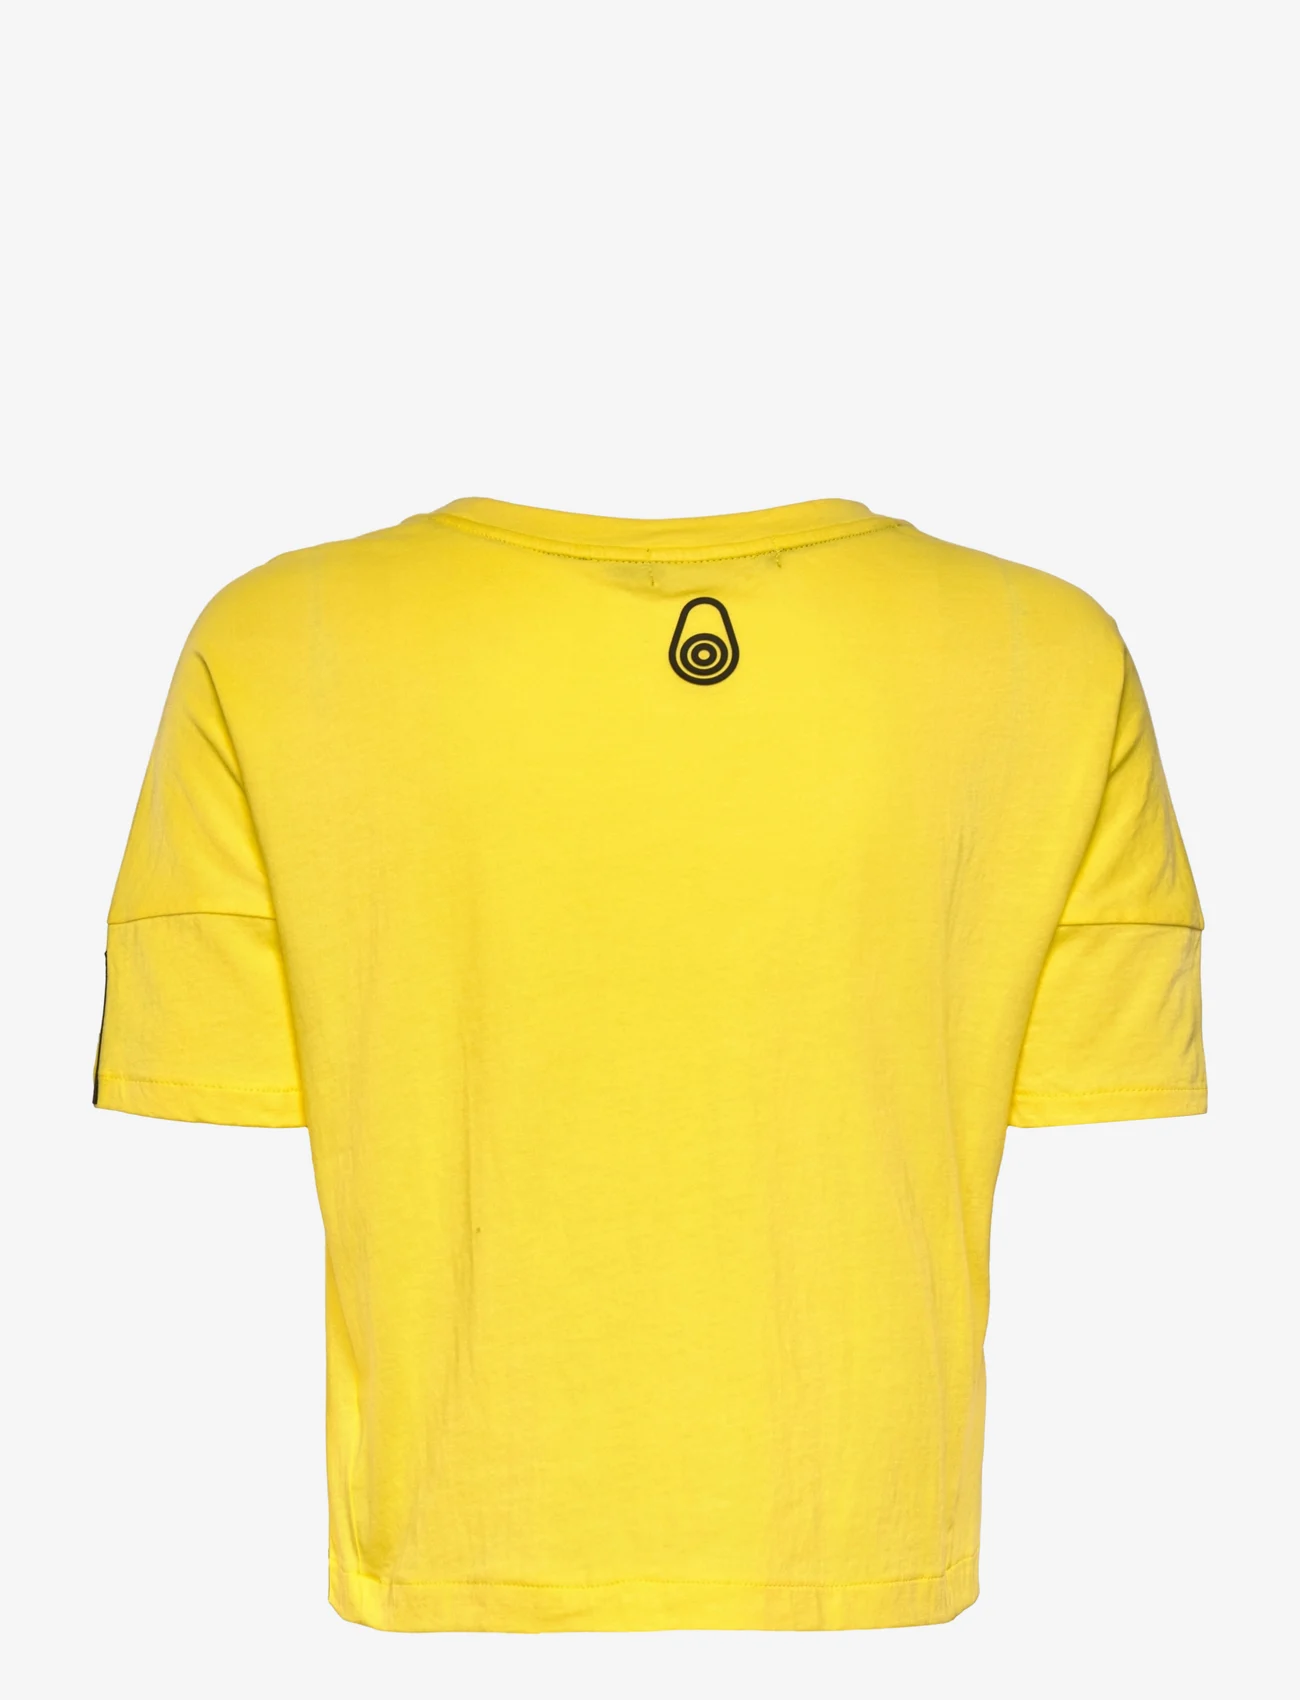 Sail Racing - W RACE TEE - t-shirts - light lemon - 1